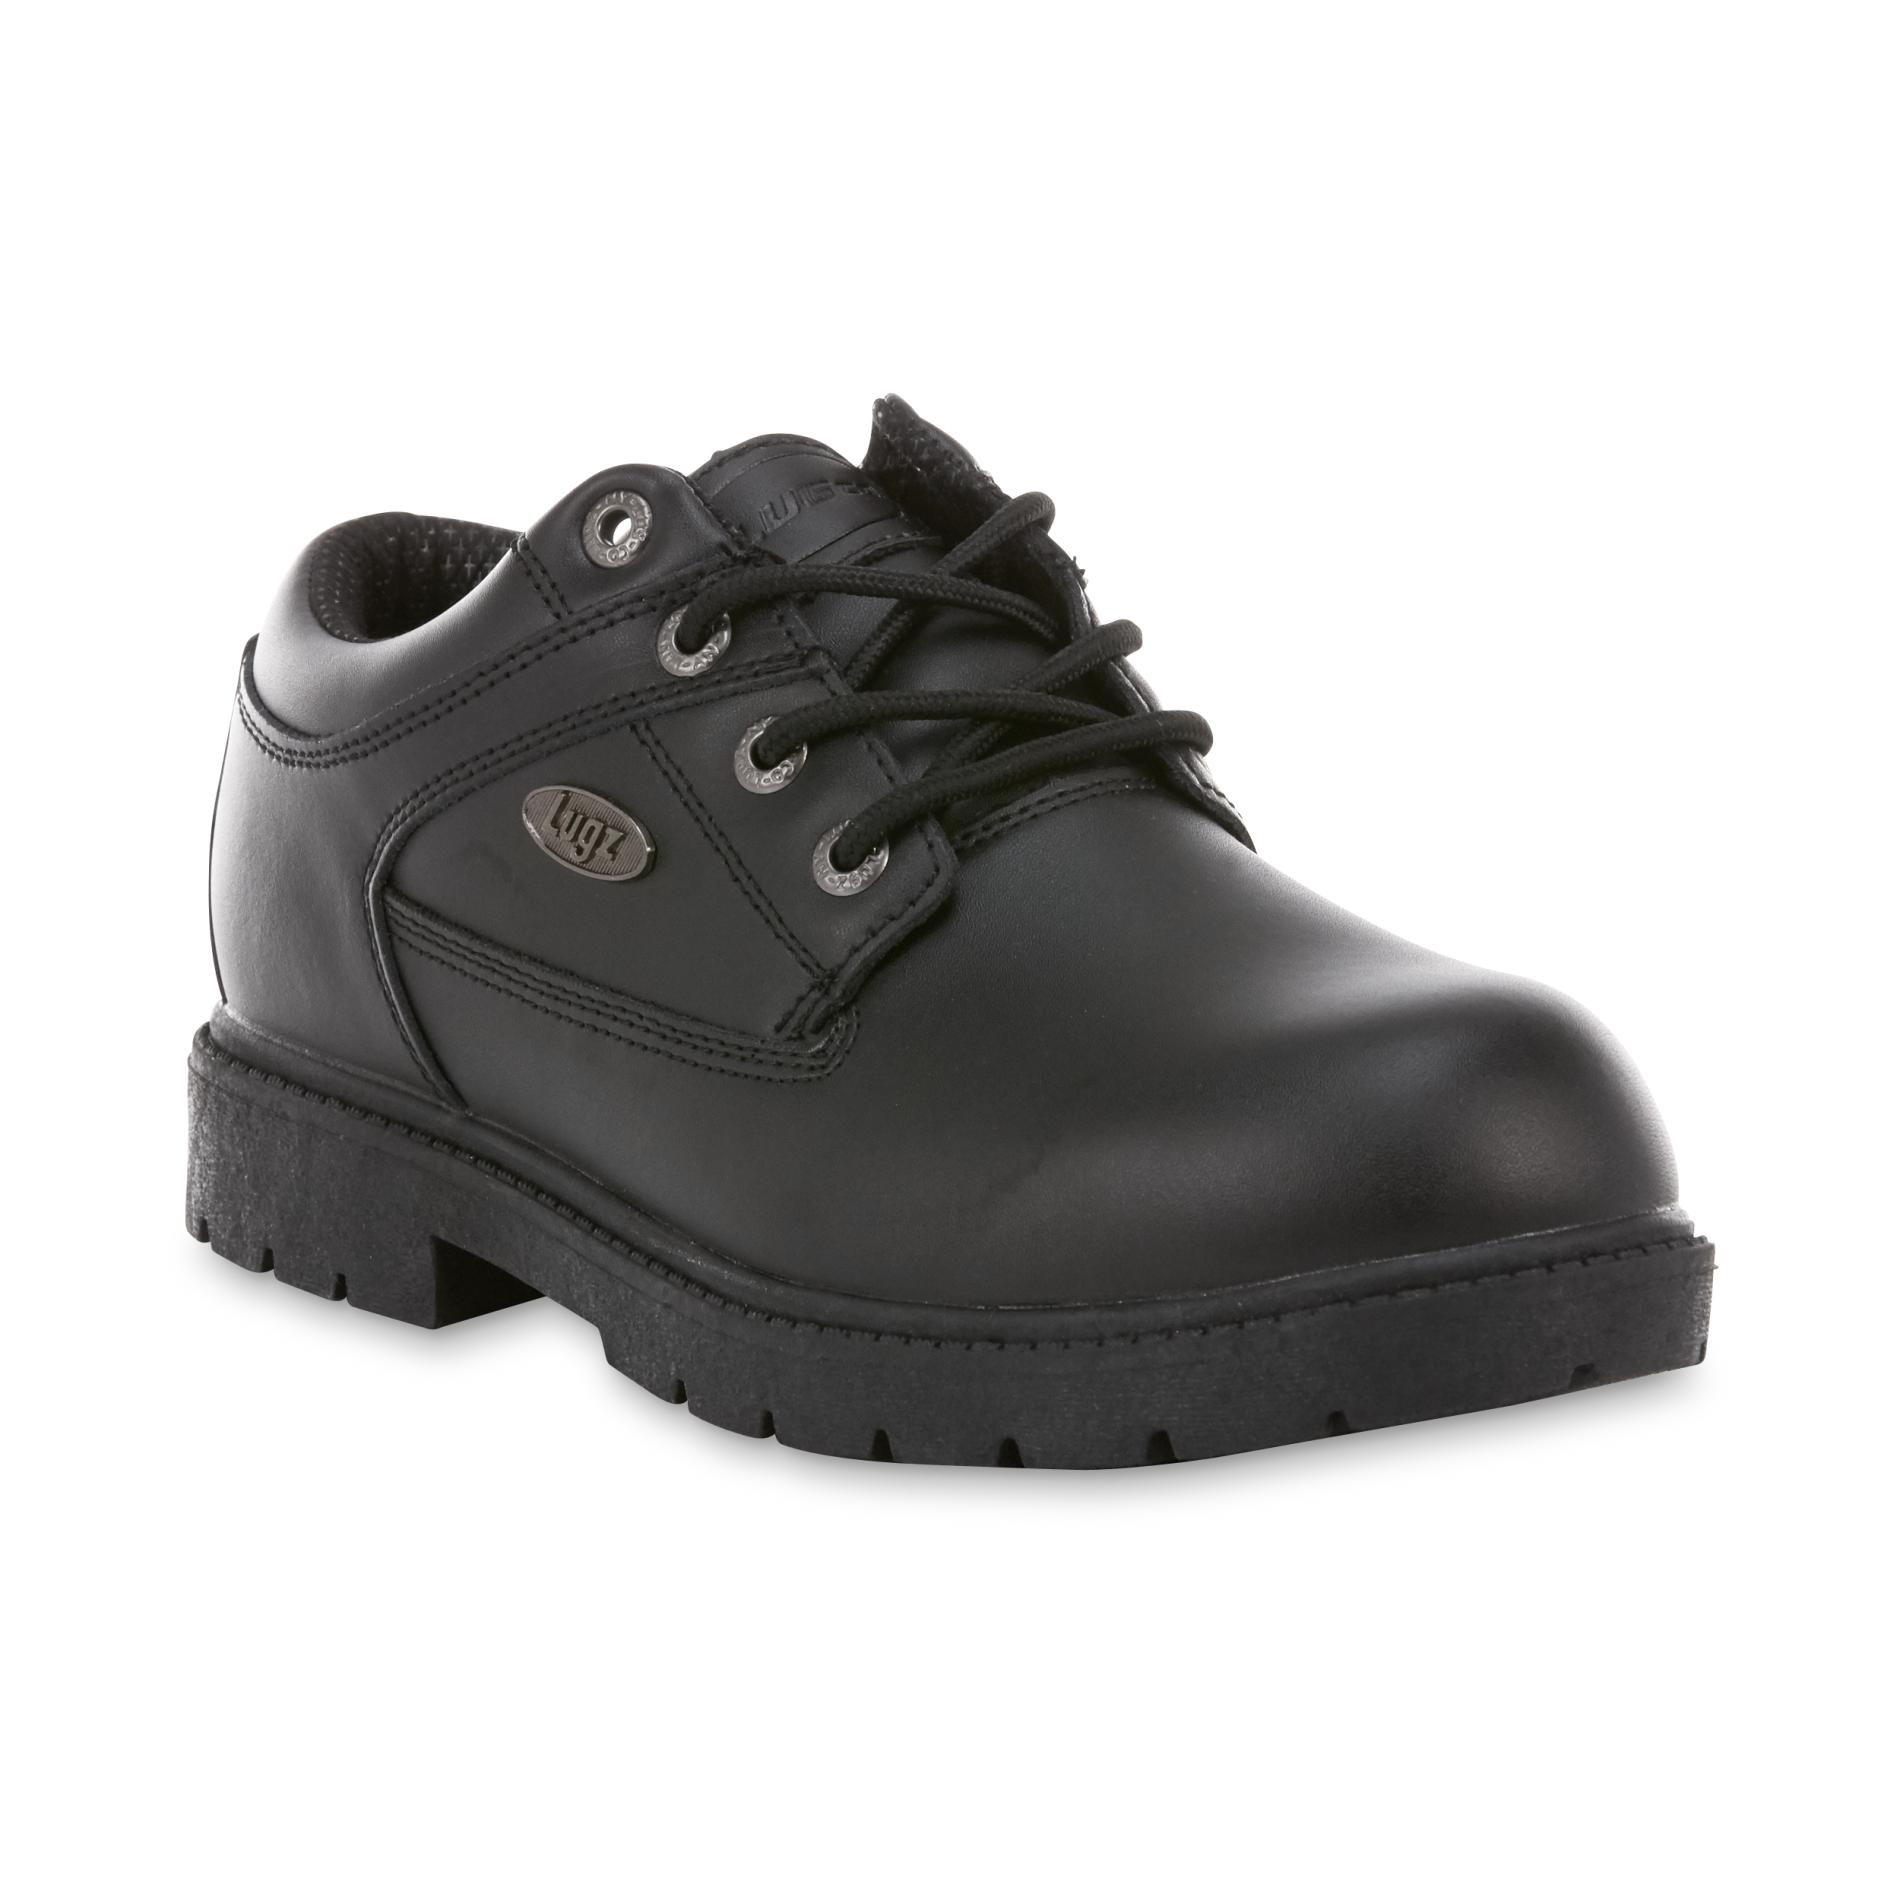 Lugz Men's Savoy Slip-Resistant Leather Oxford - Black